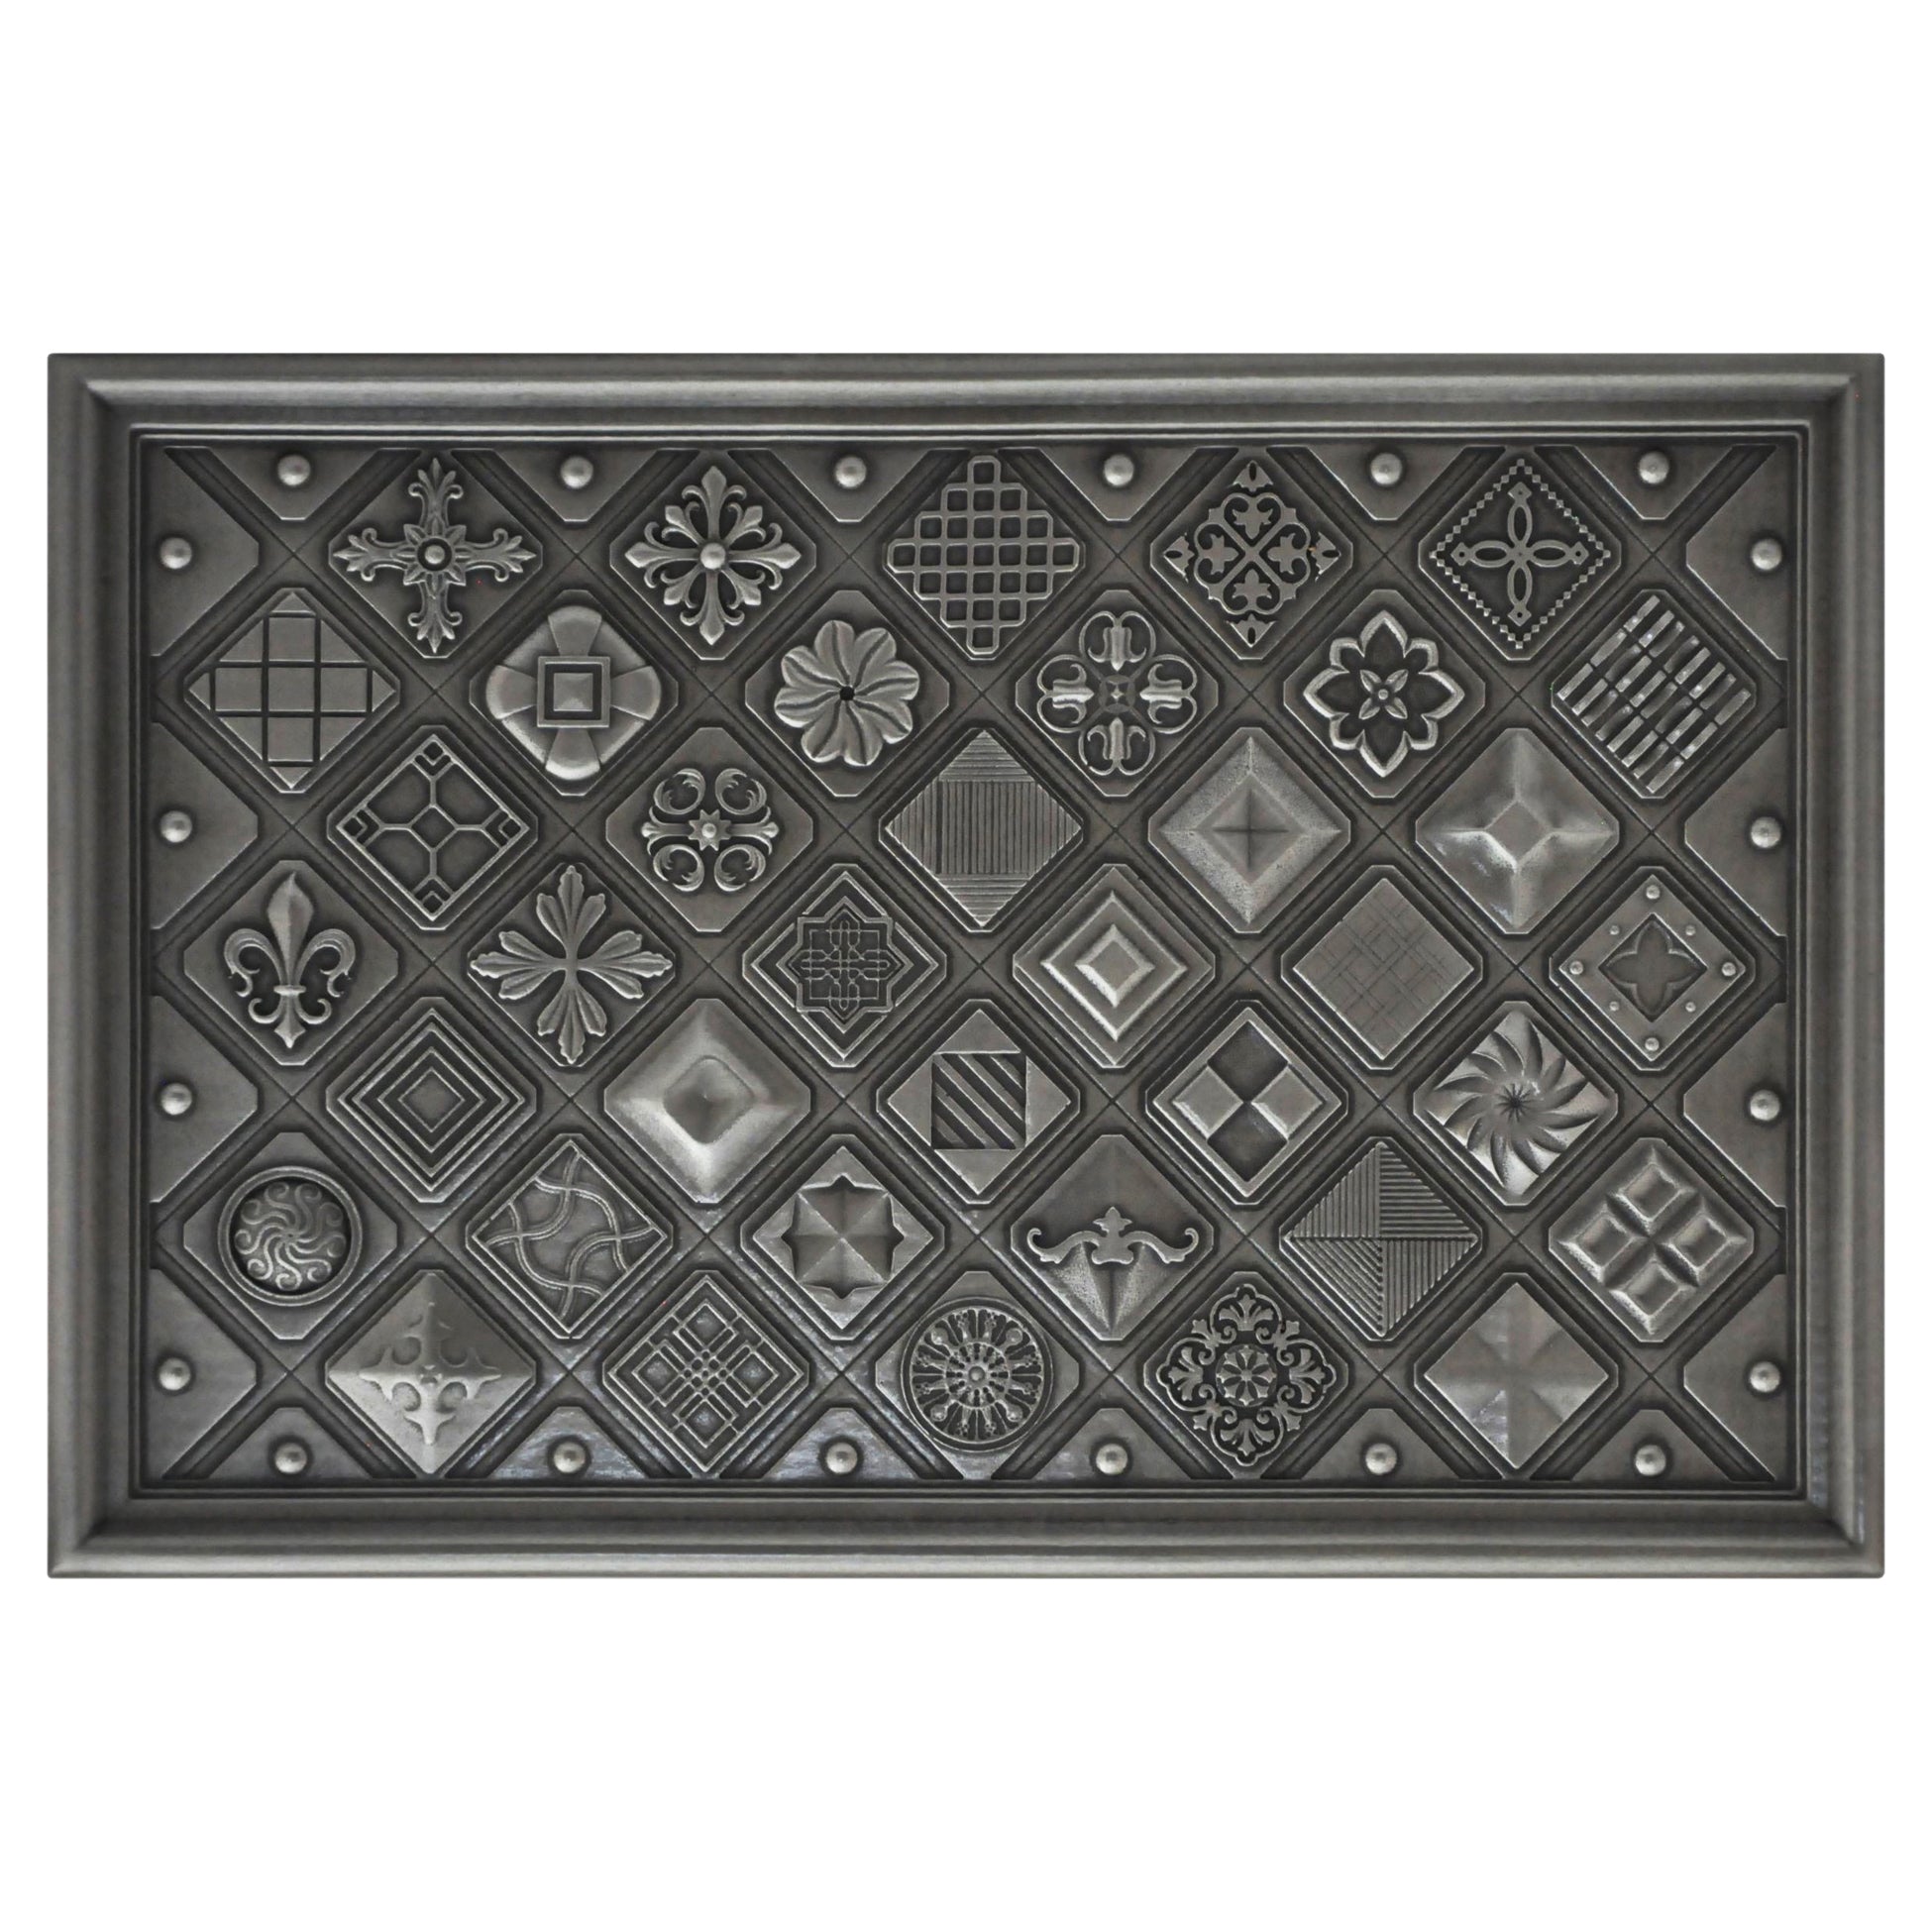 12x18 inch Potpourri Mix Hand Made Textured Premium Metal Decorative Mural Tile for Kitchen Backsplash and Fireplace (Antique Niquel)